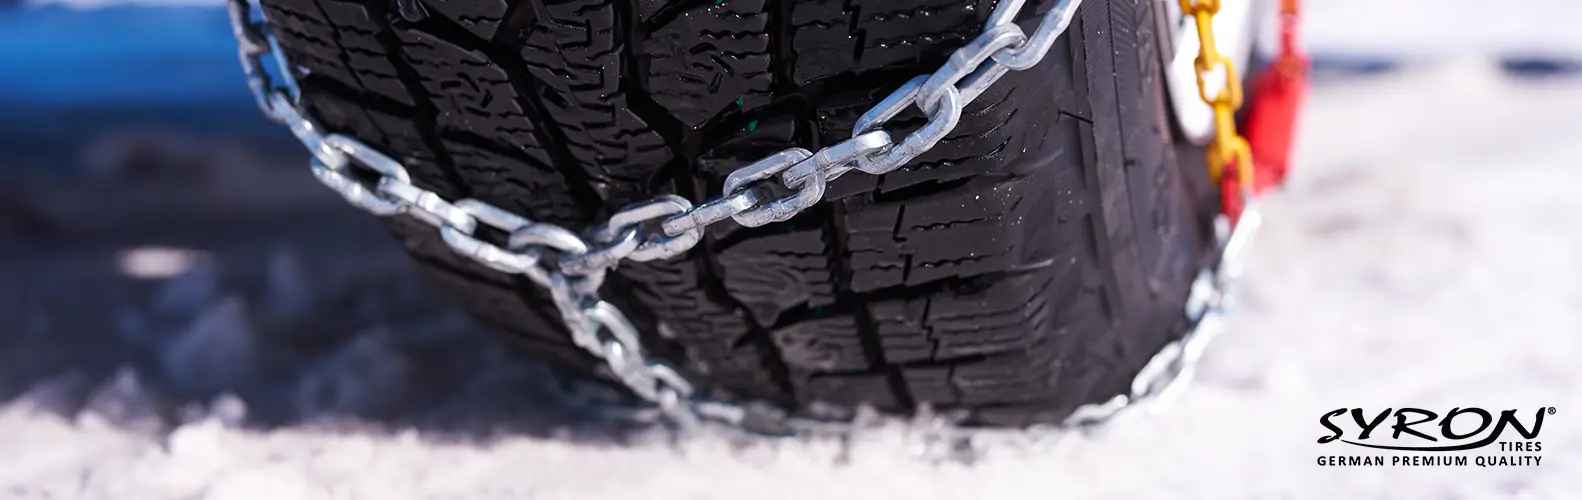  Über-die-Reifen Ketten: die Notwendige